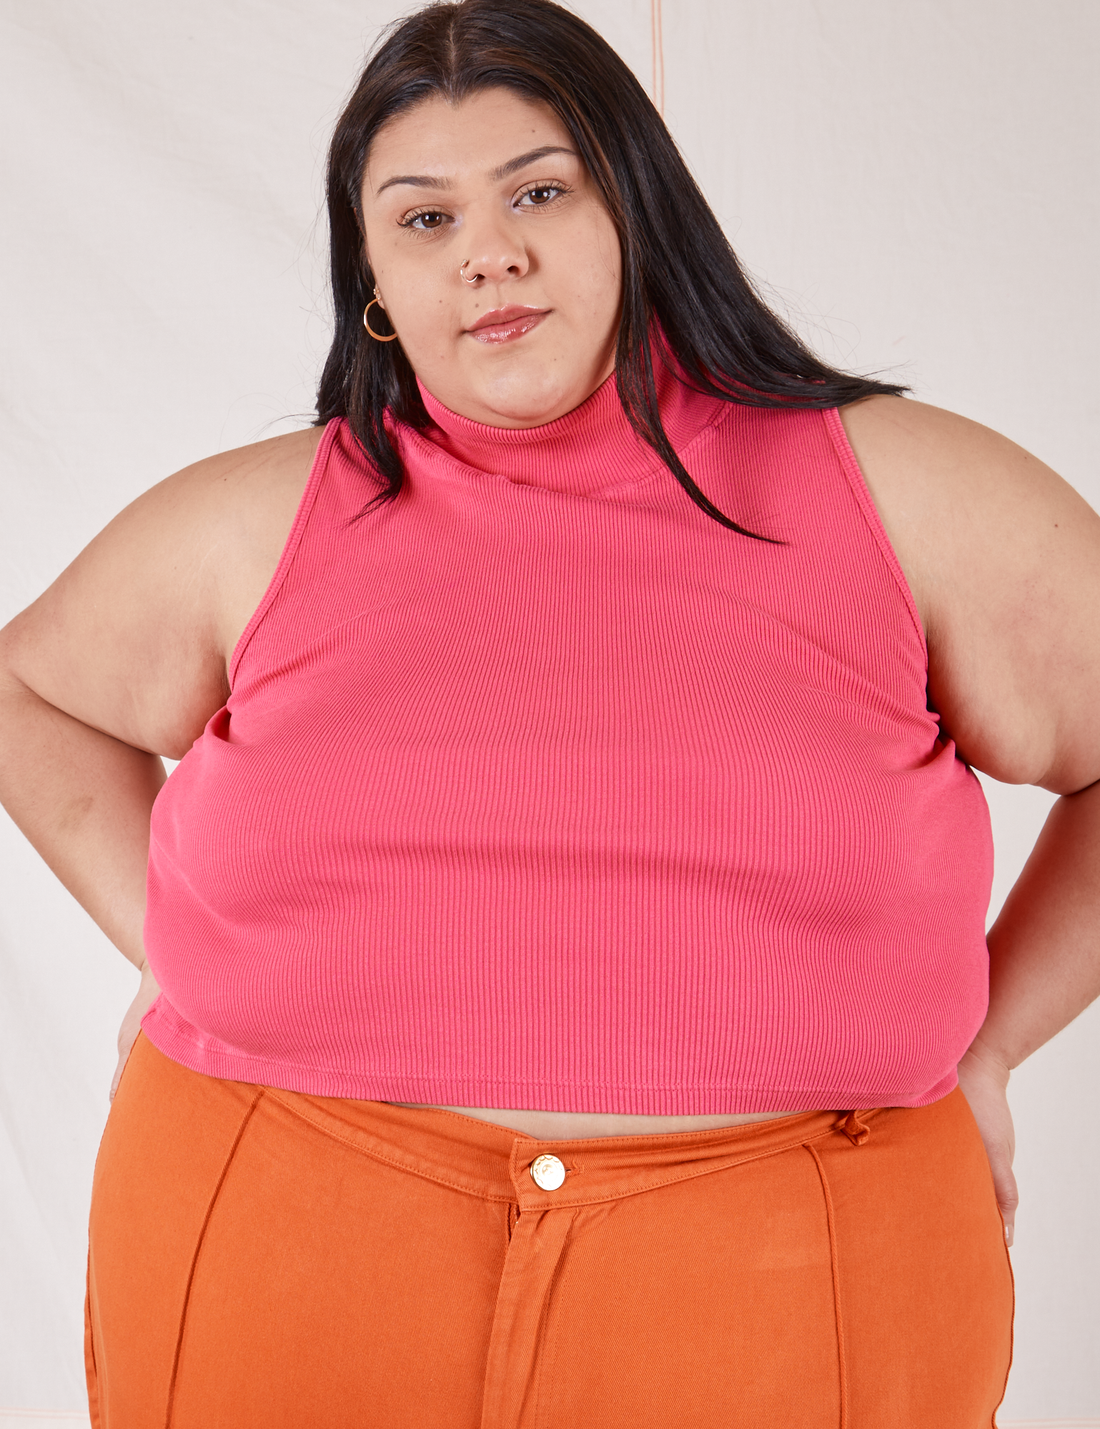 Sarita is wearing 2XL Sleeveless Essential Turtleneck in Hot Pink